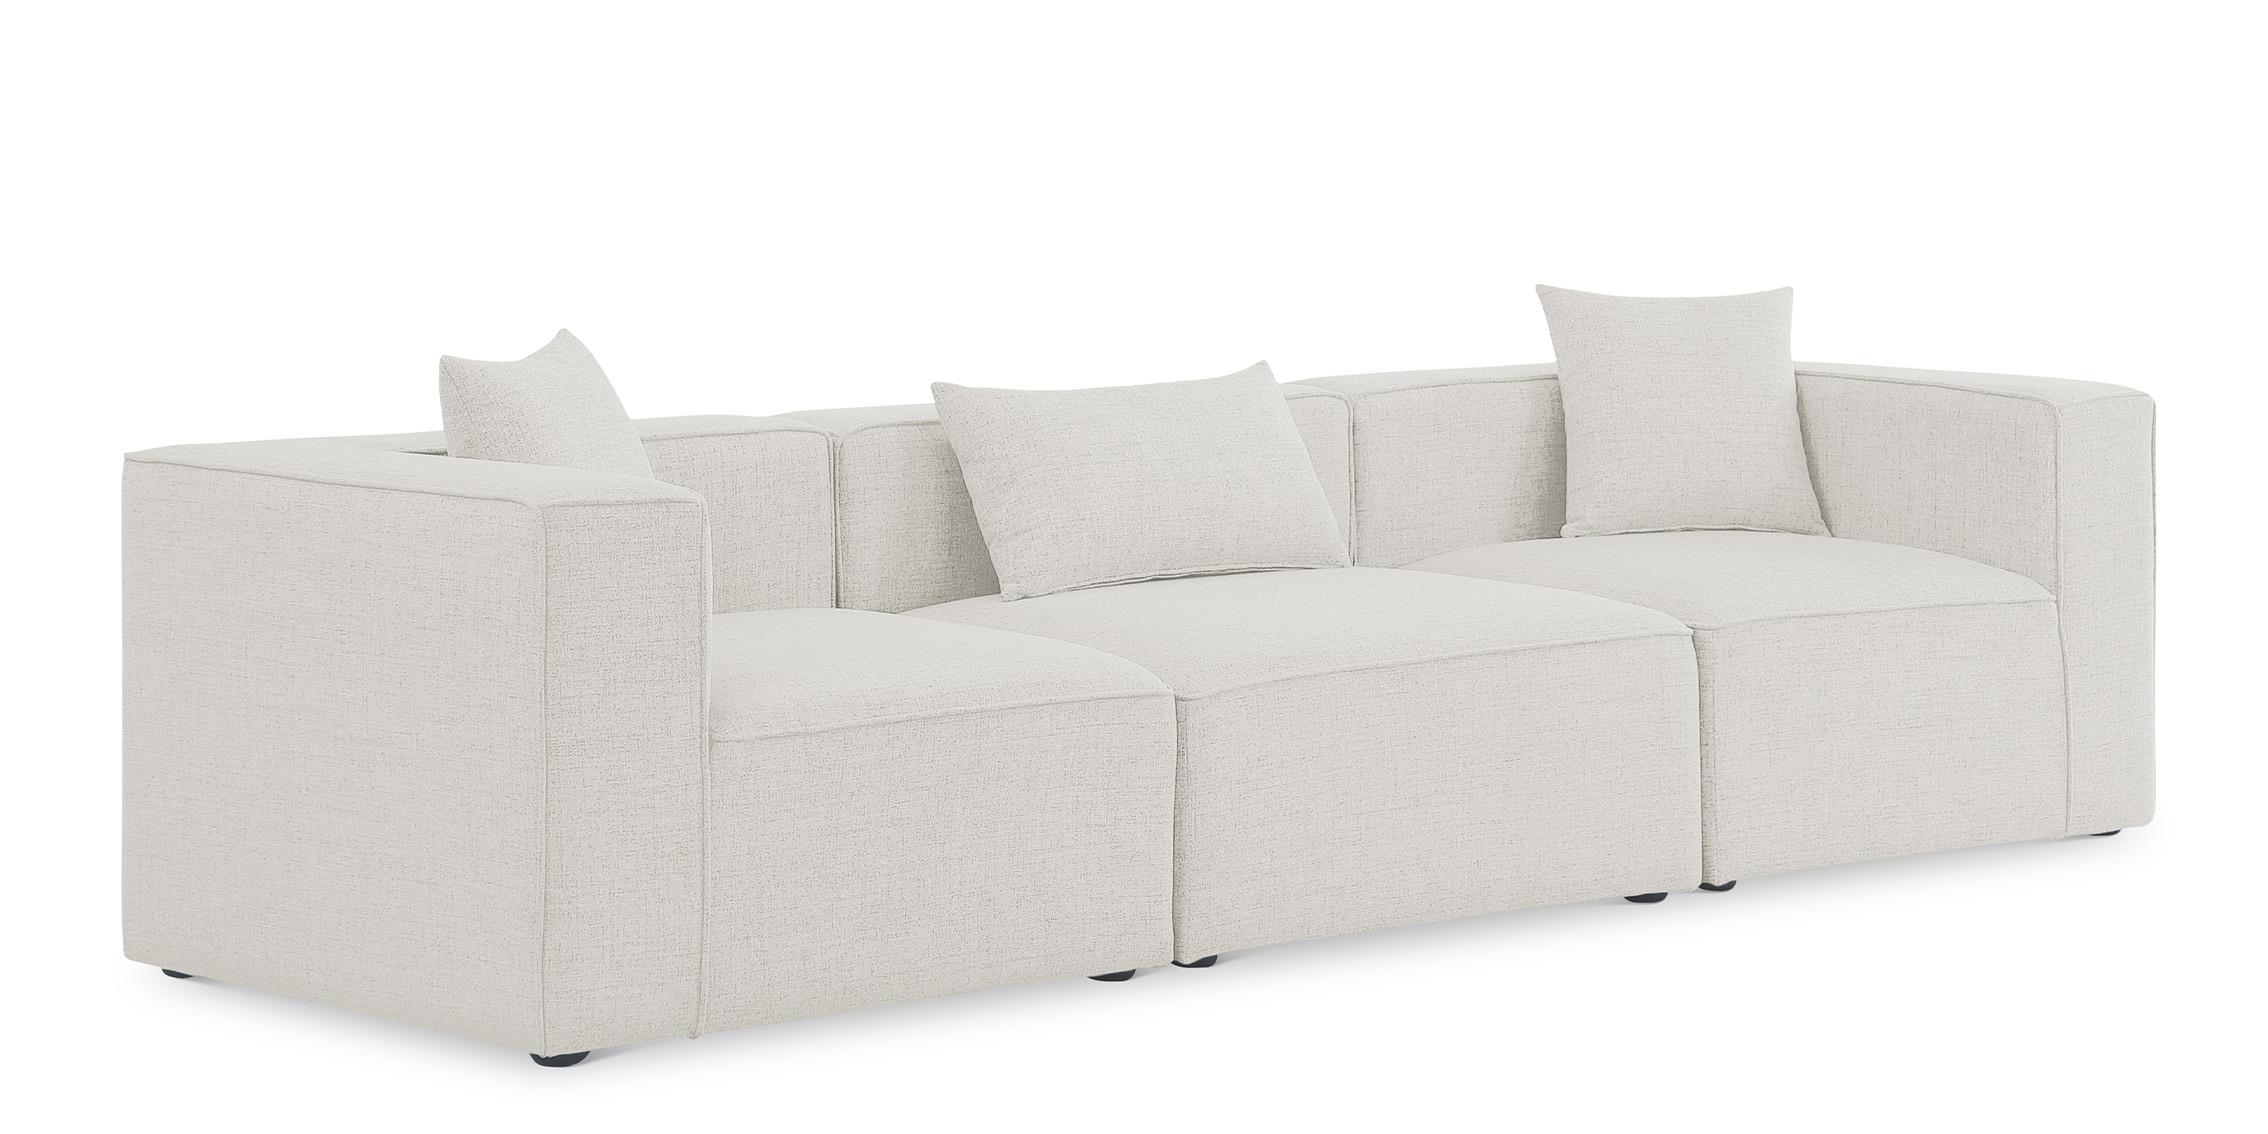 Contemporary, Modern Modular Sofa CUBE 630Cream-S108B 630Cream-S108B in Cream Linen